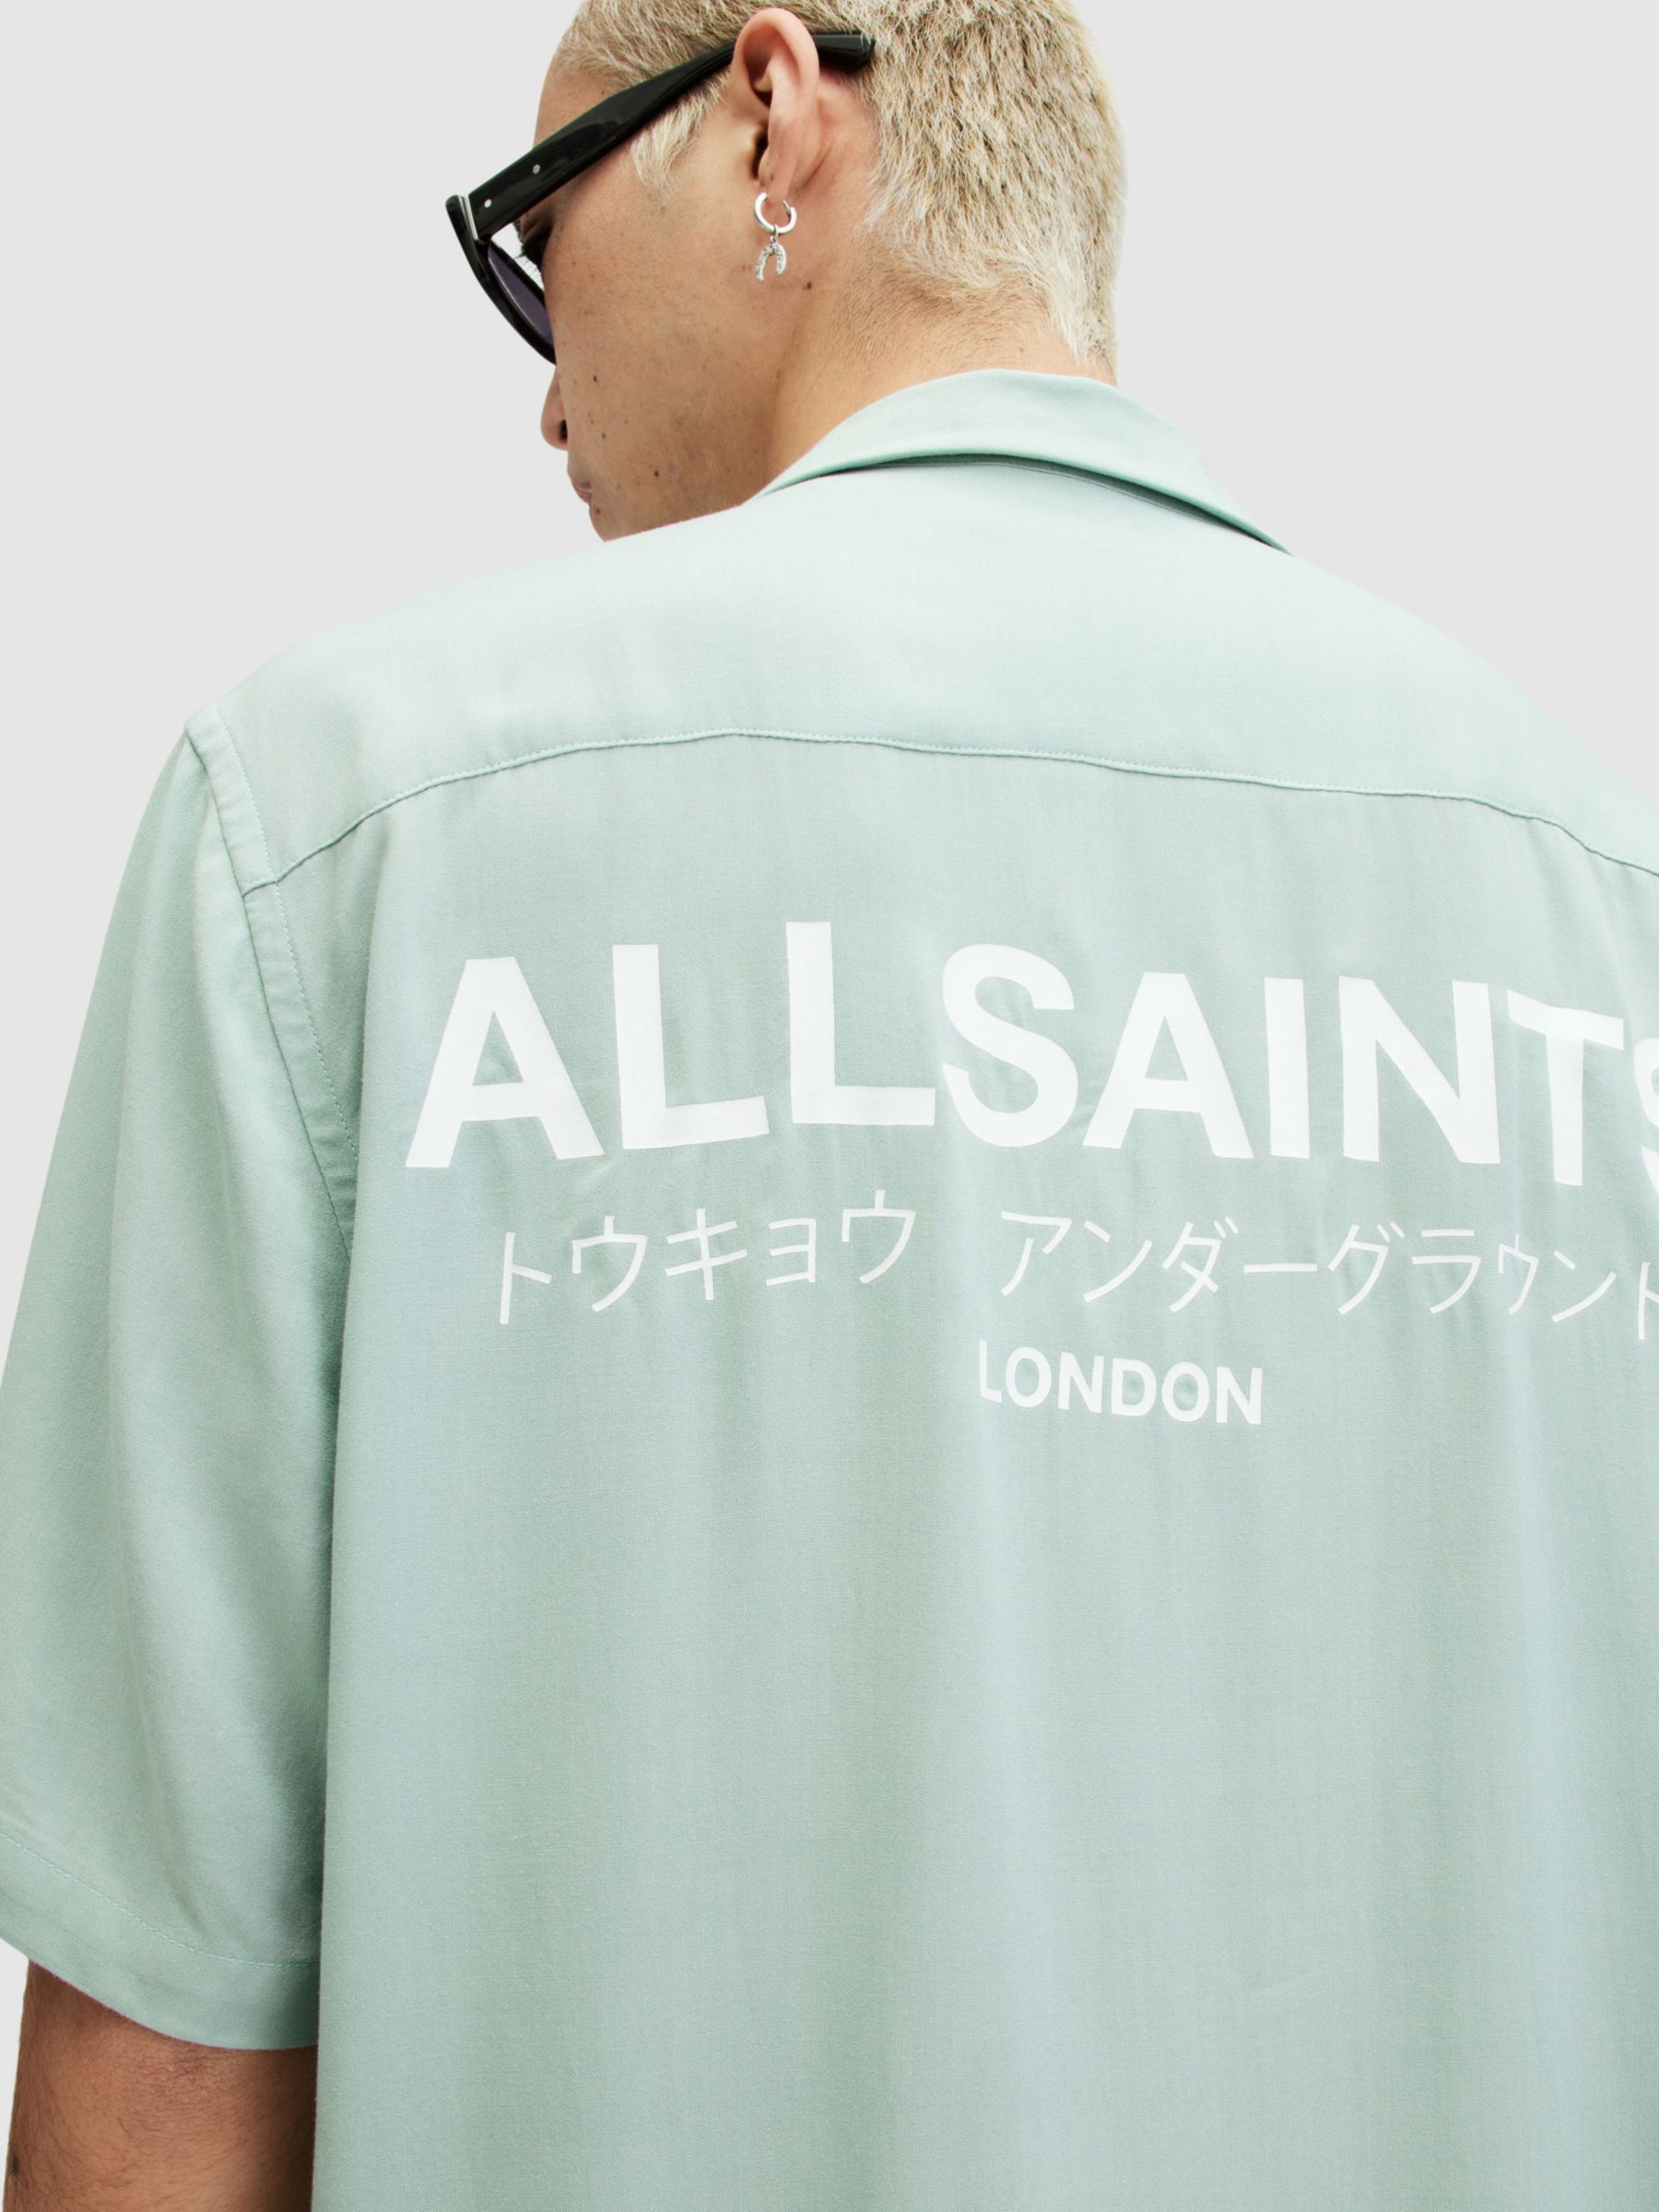 Buy AllSaints Underground Short Sleeve Revere Collar Shirt Online at johnlewis.com